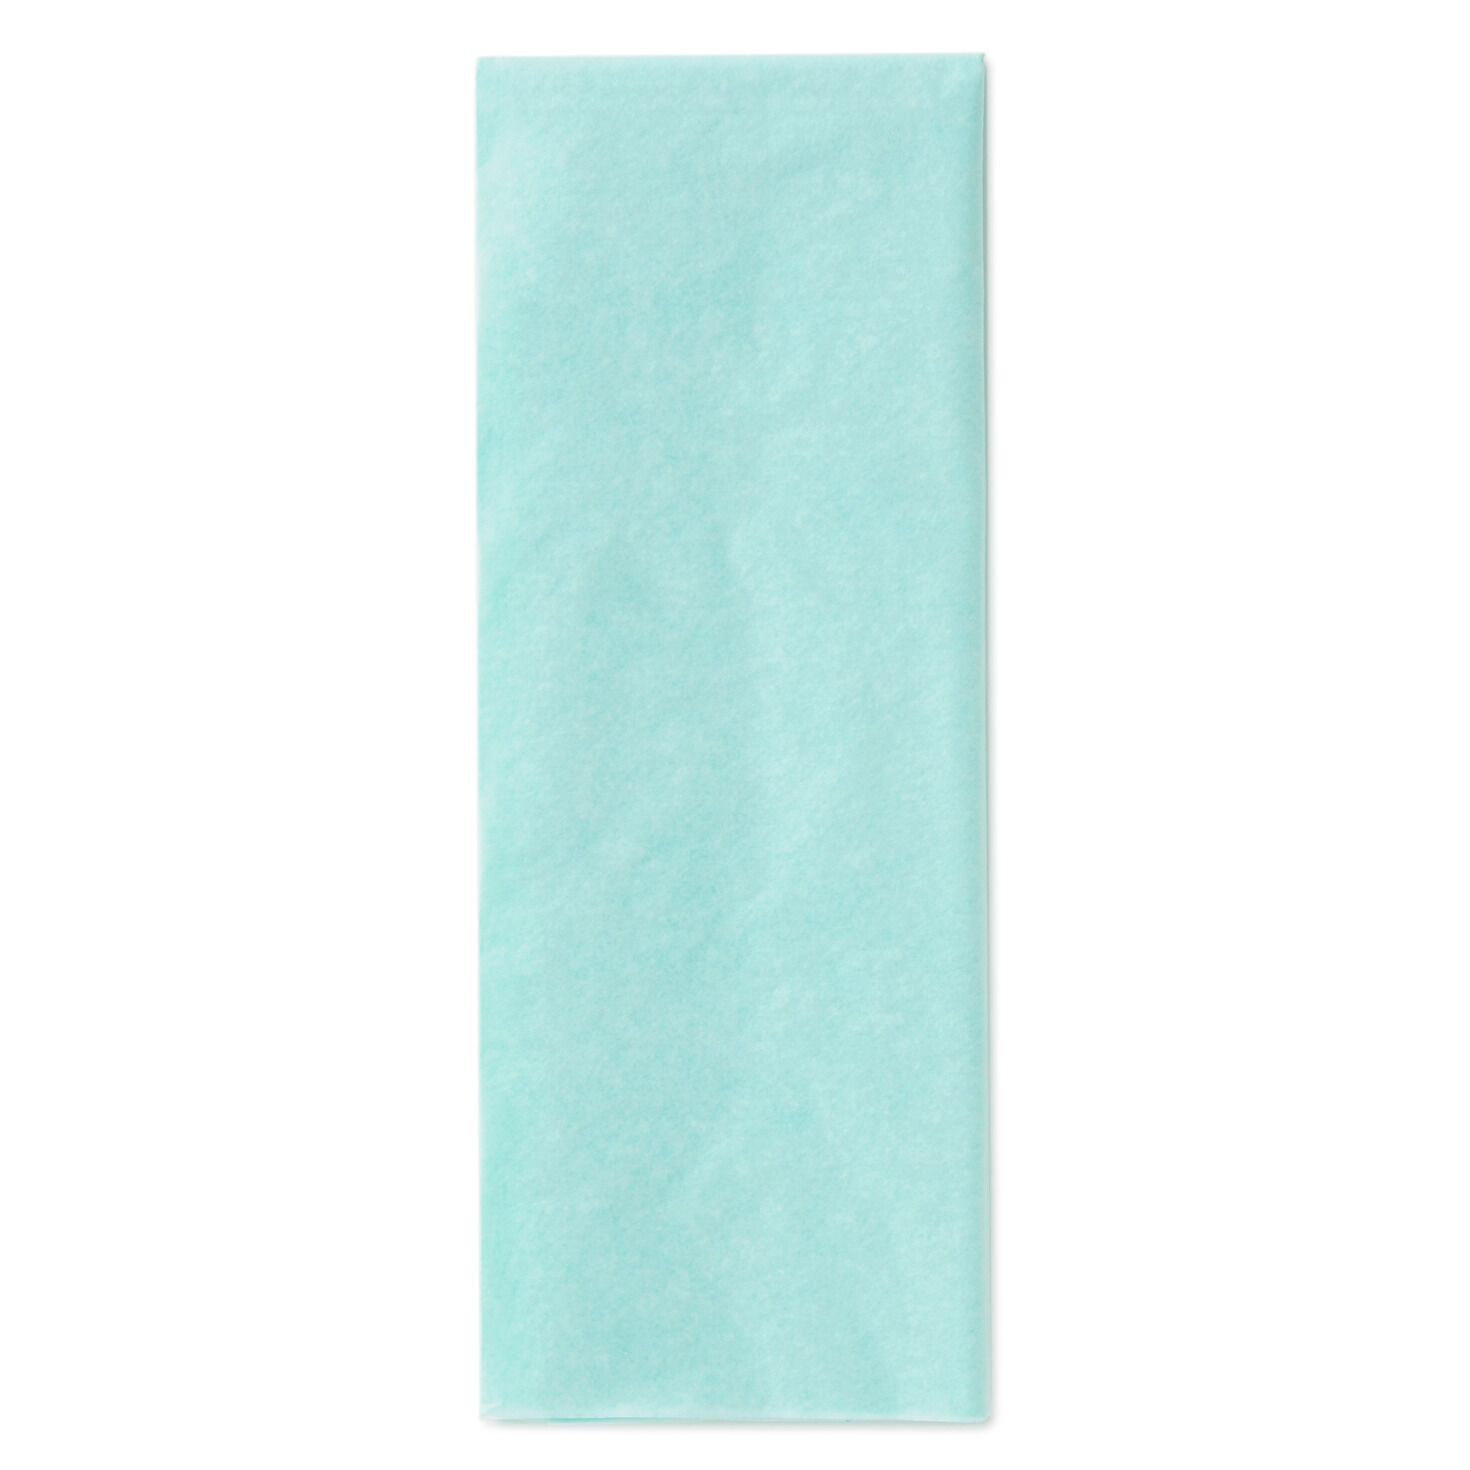 Blue & Light Blue Tissue Paper Lot of 6 8 Sheets per Pack 20" x 20" 